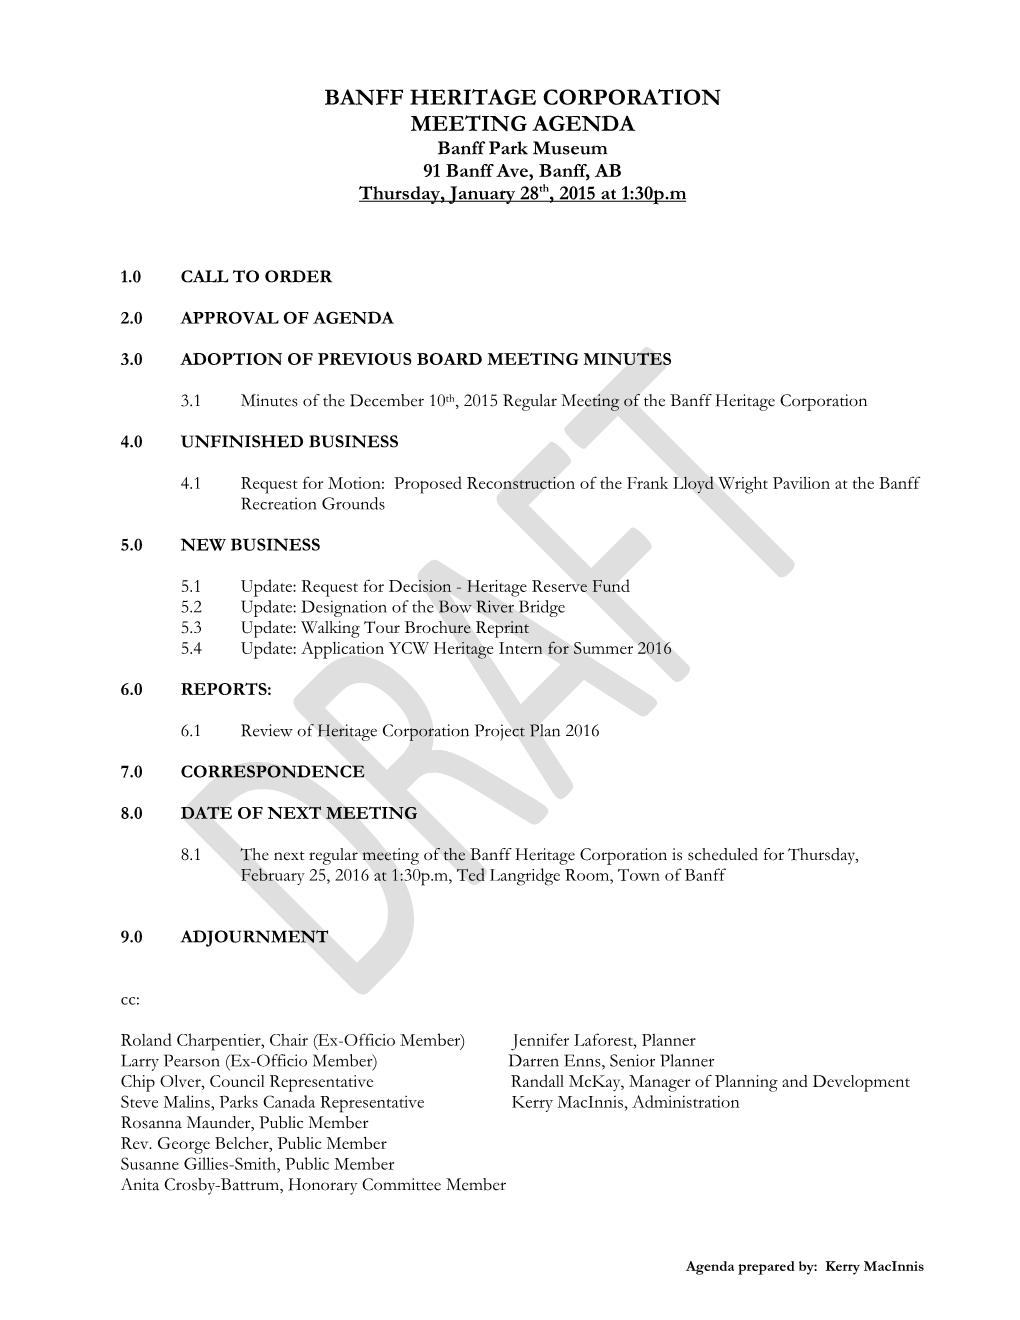 Banff Heritage Corporation Meeting Agenda for January 28, 2016